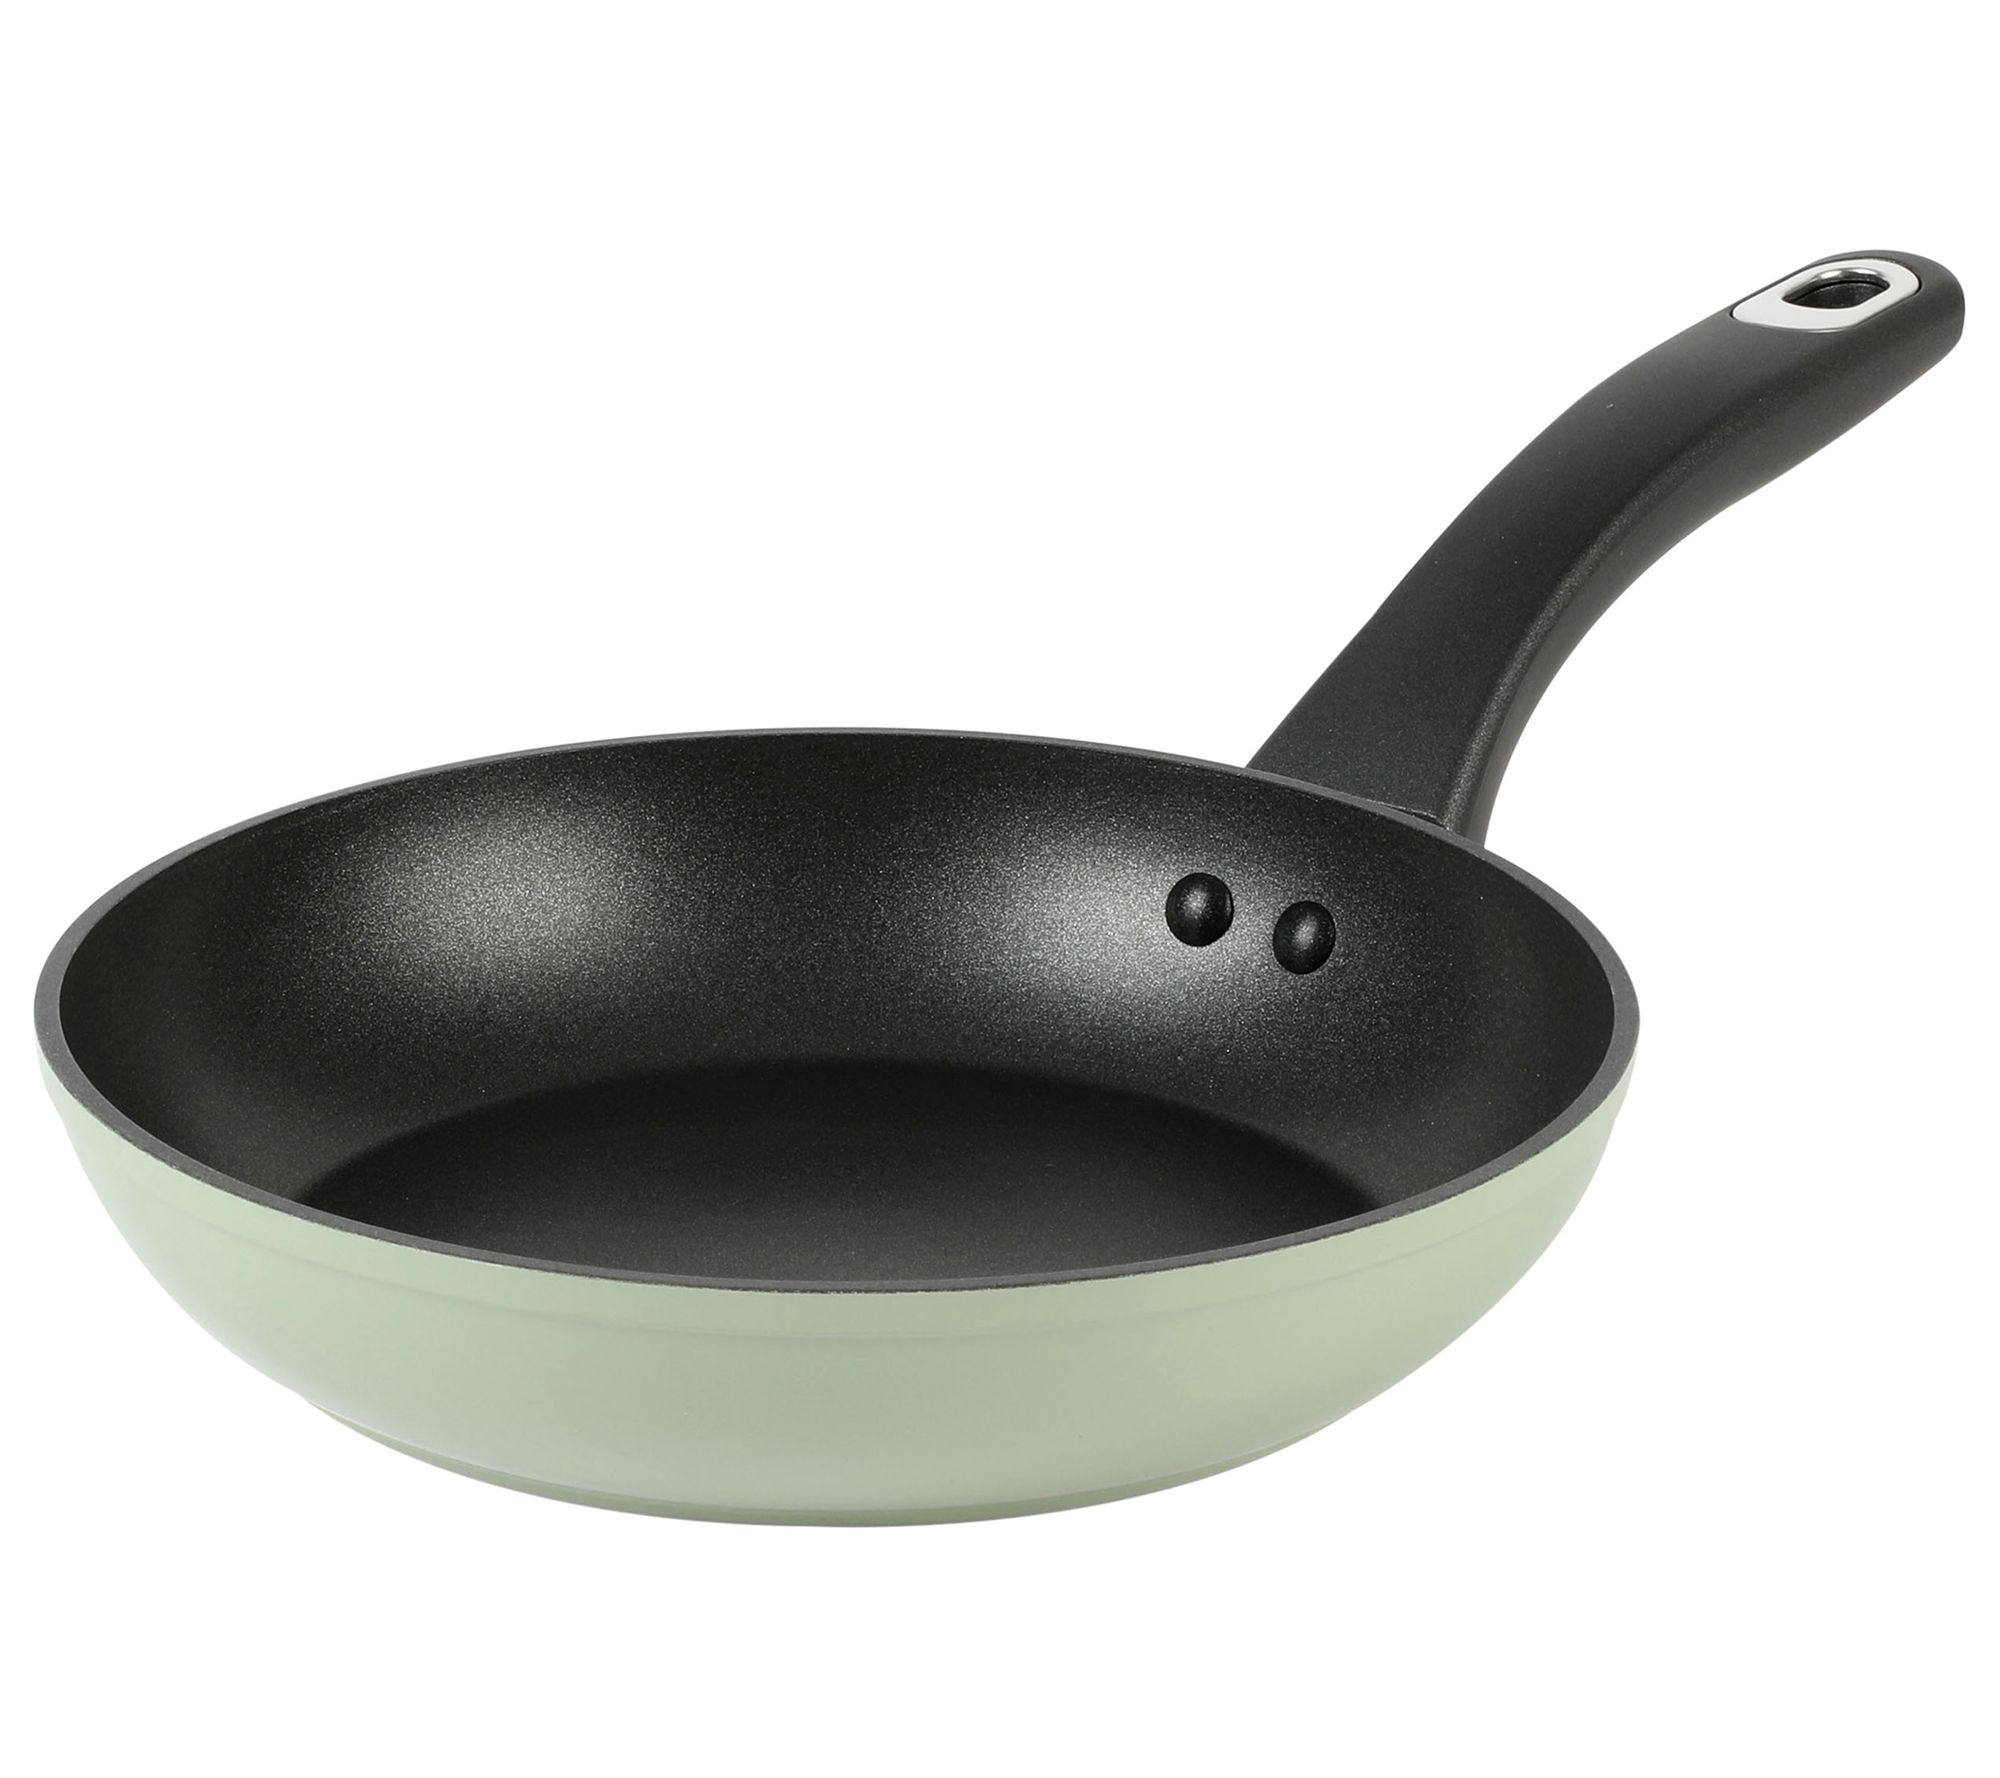 Martha Stewart Everyday Doylestown 12 inch Nonstick Aluminum Frying Pan in Black